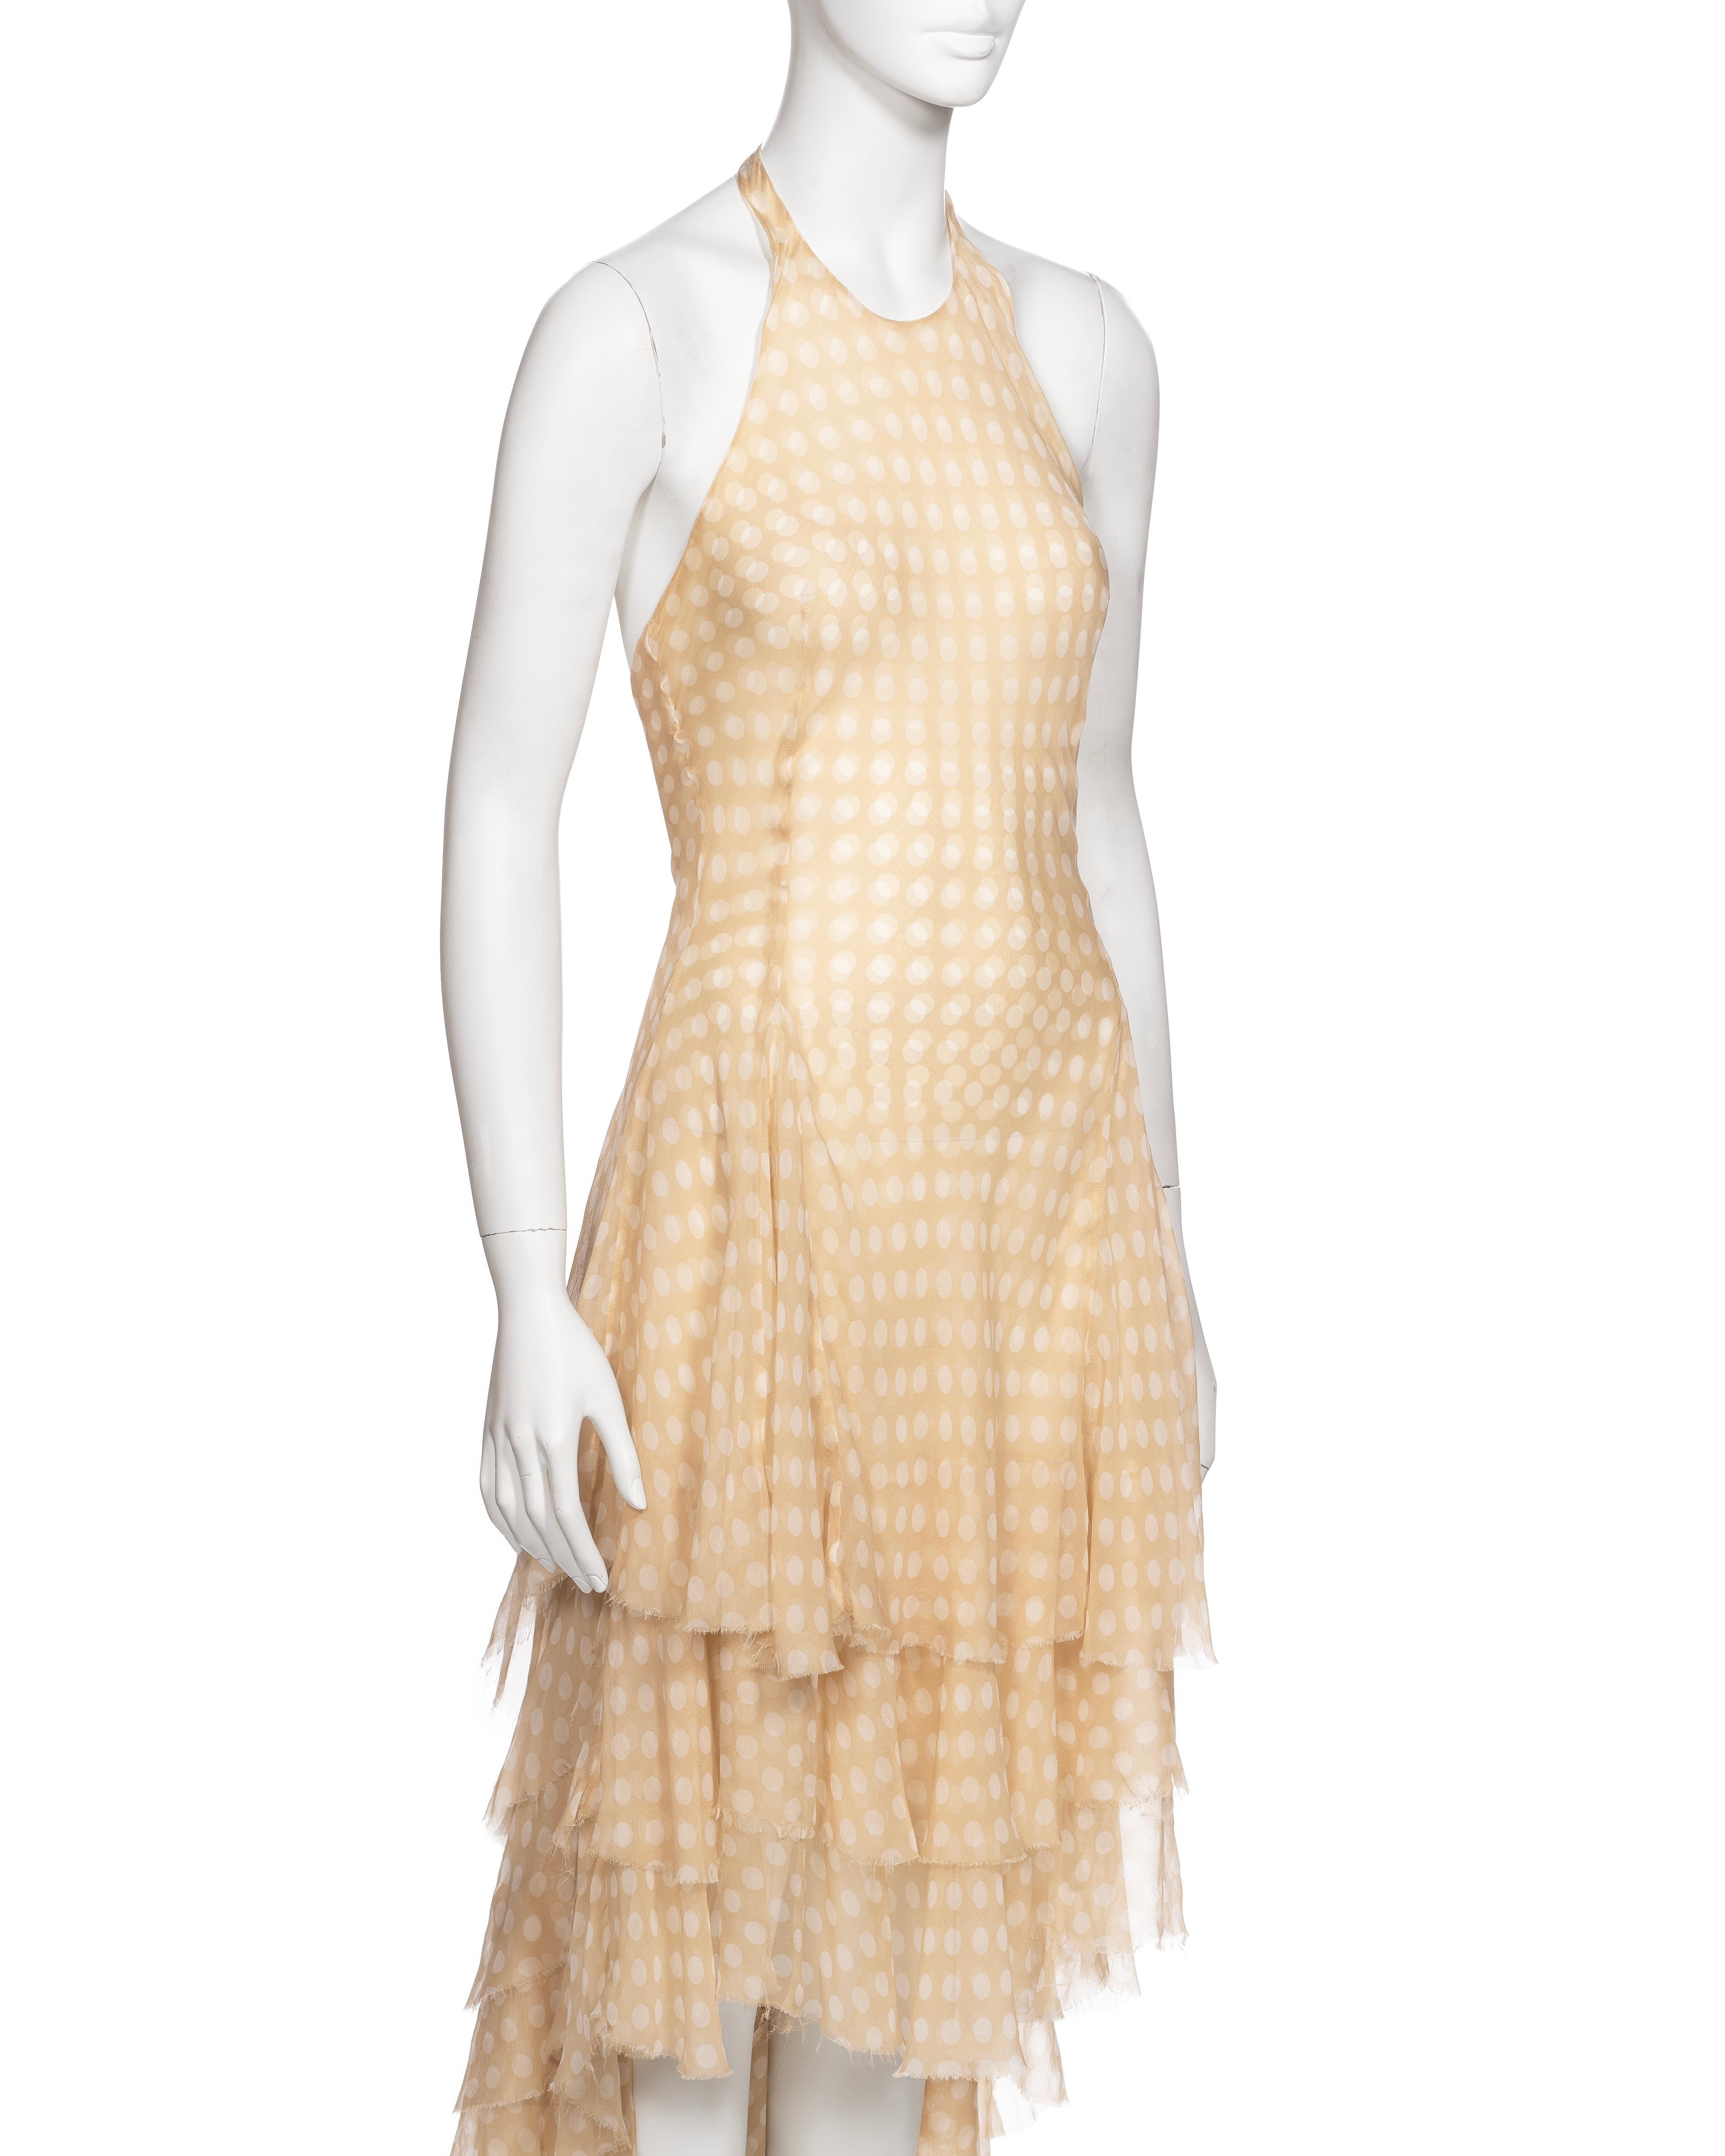 Alexander McQueen Cream Polka Dot Silk Chiffon Halter Neck Dress, SS 2002 For Sale 1